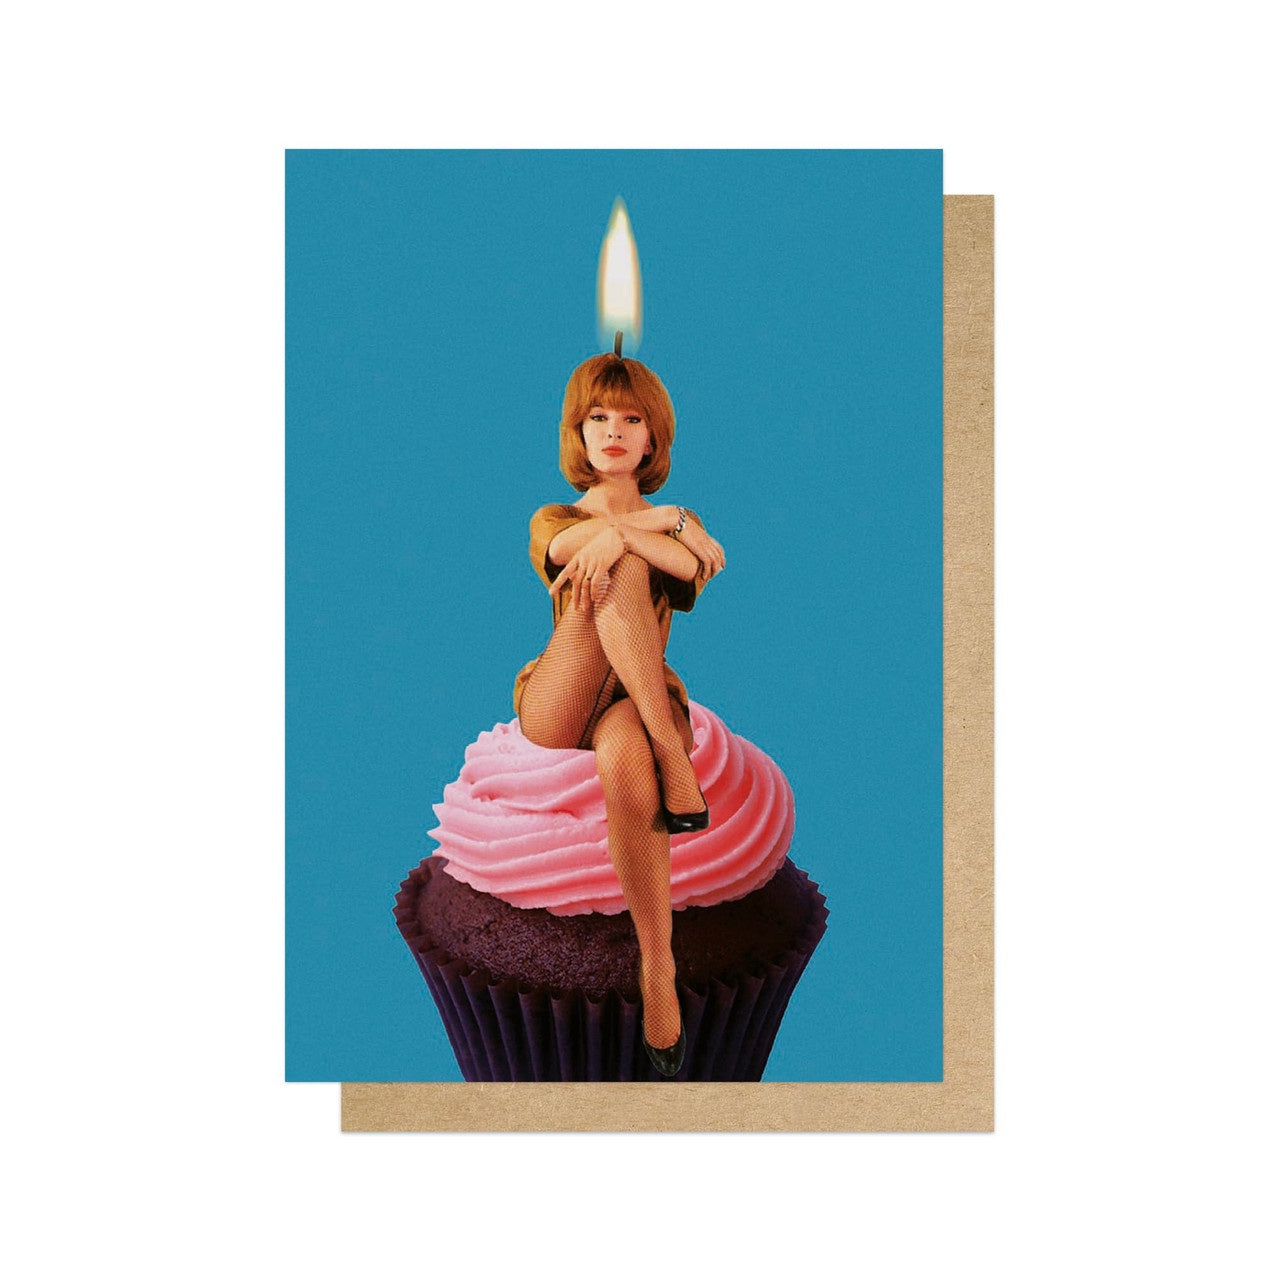 Cupcake Girl Card